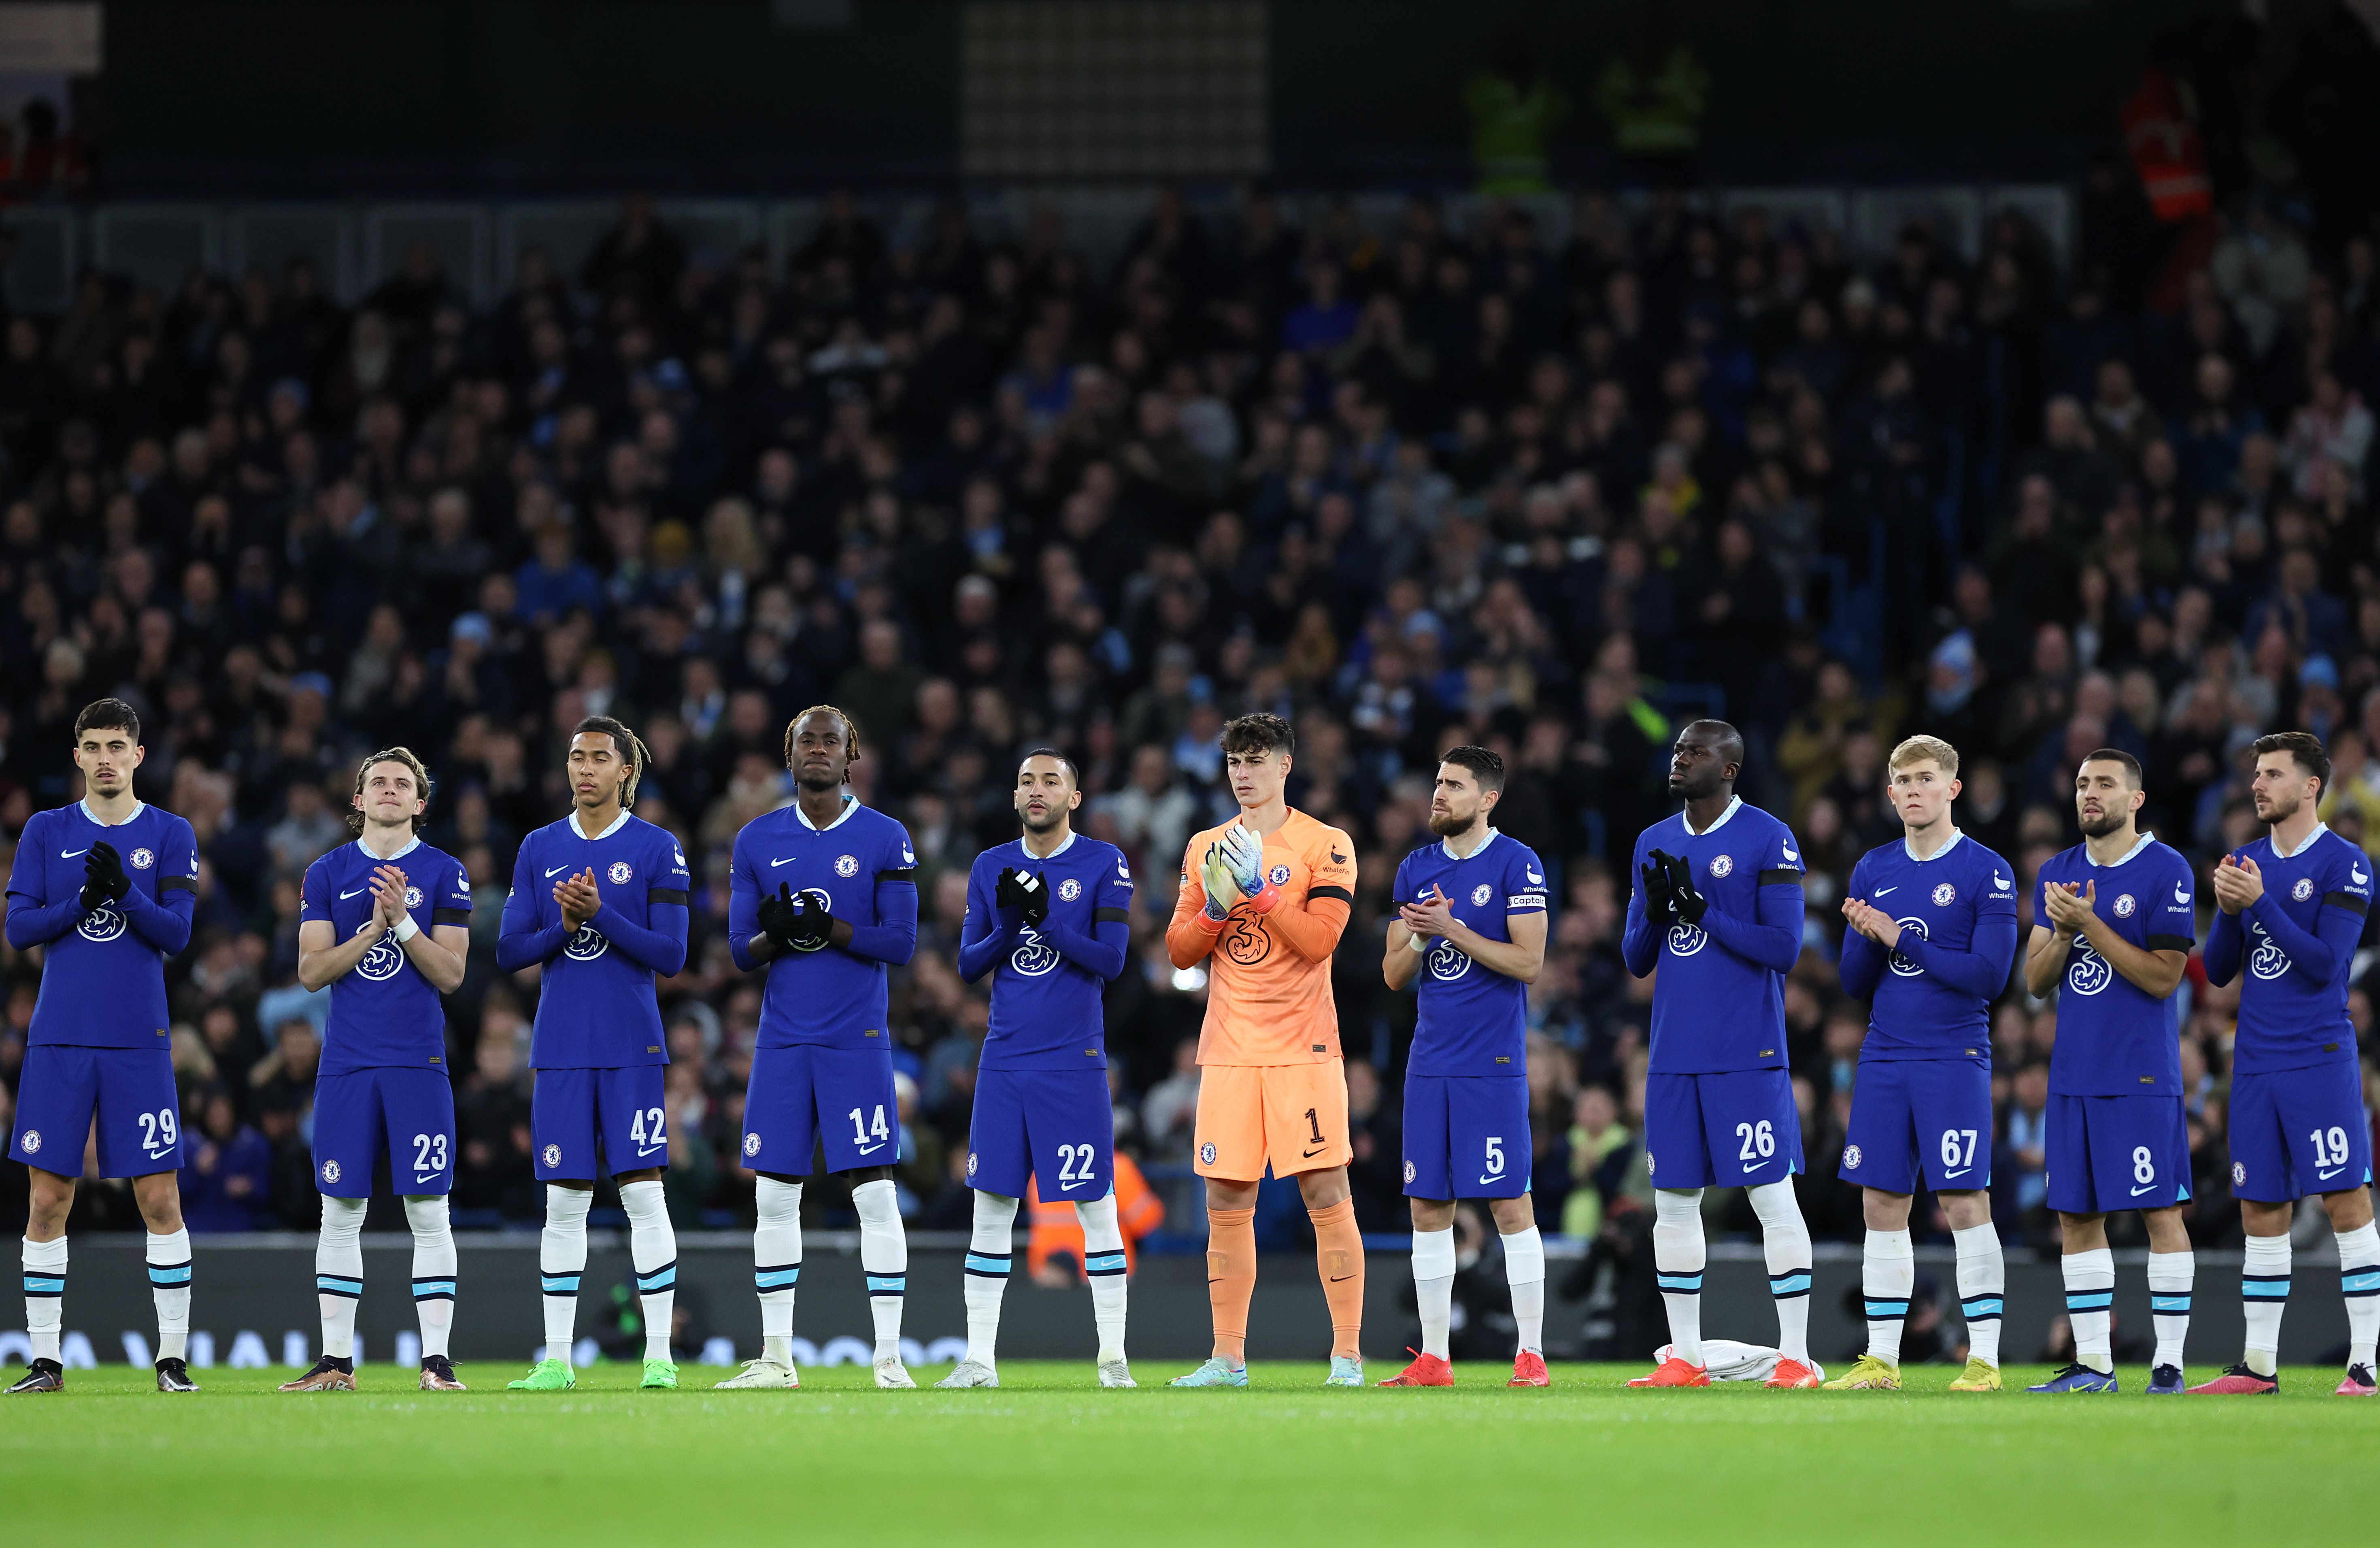 Chelsea's players vs Man City